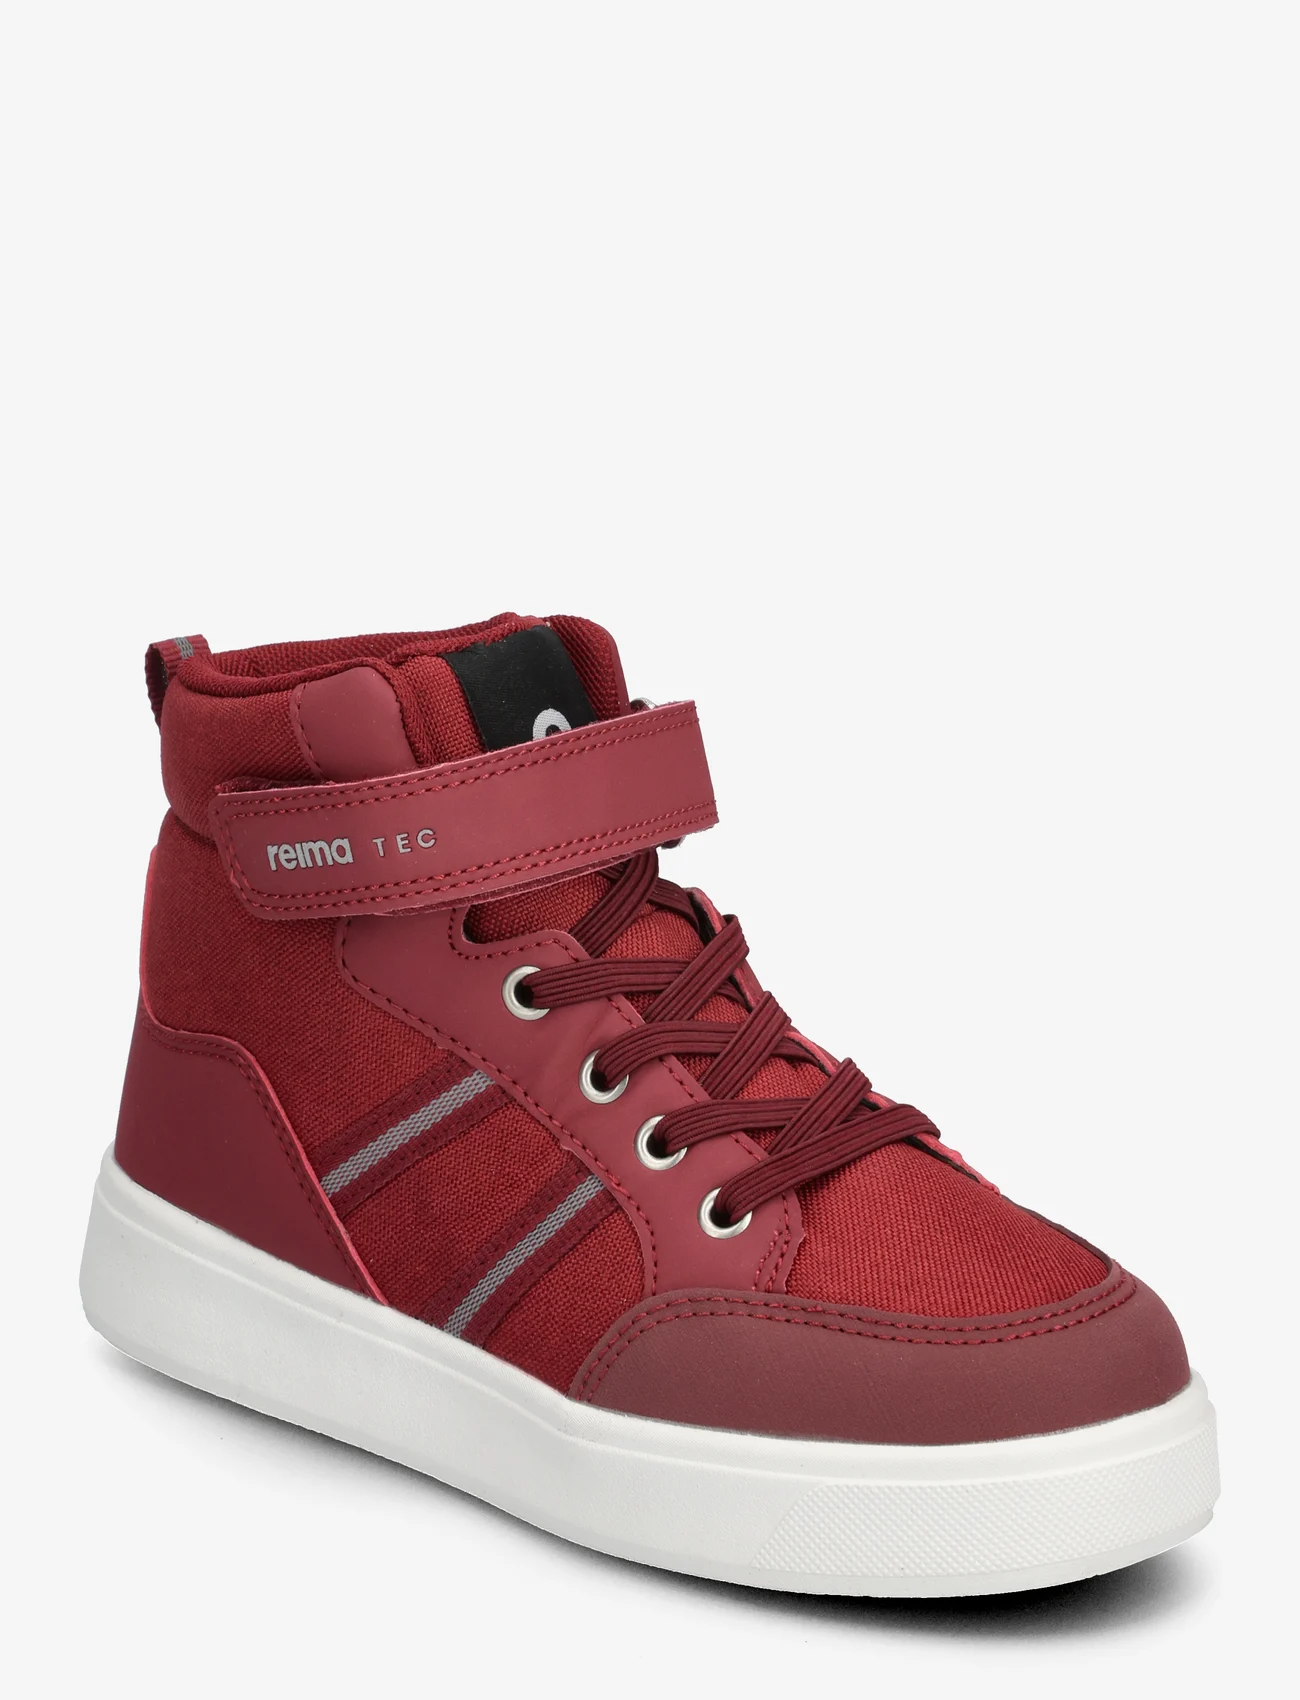 Reima - Reimatec sneakers, Skeitti - high-top sneakers - jam red - 0